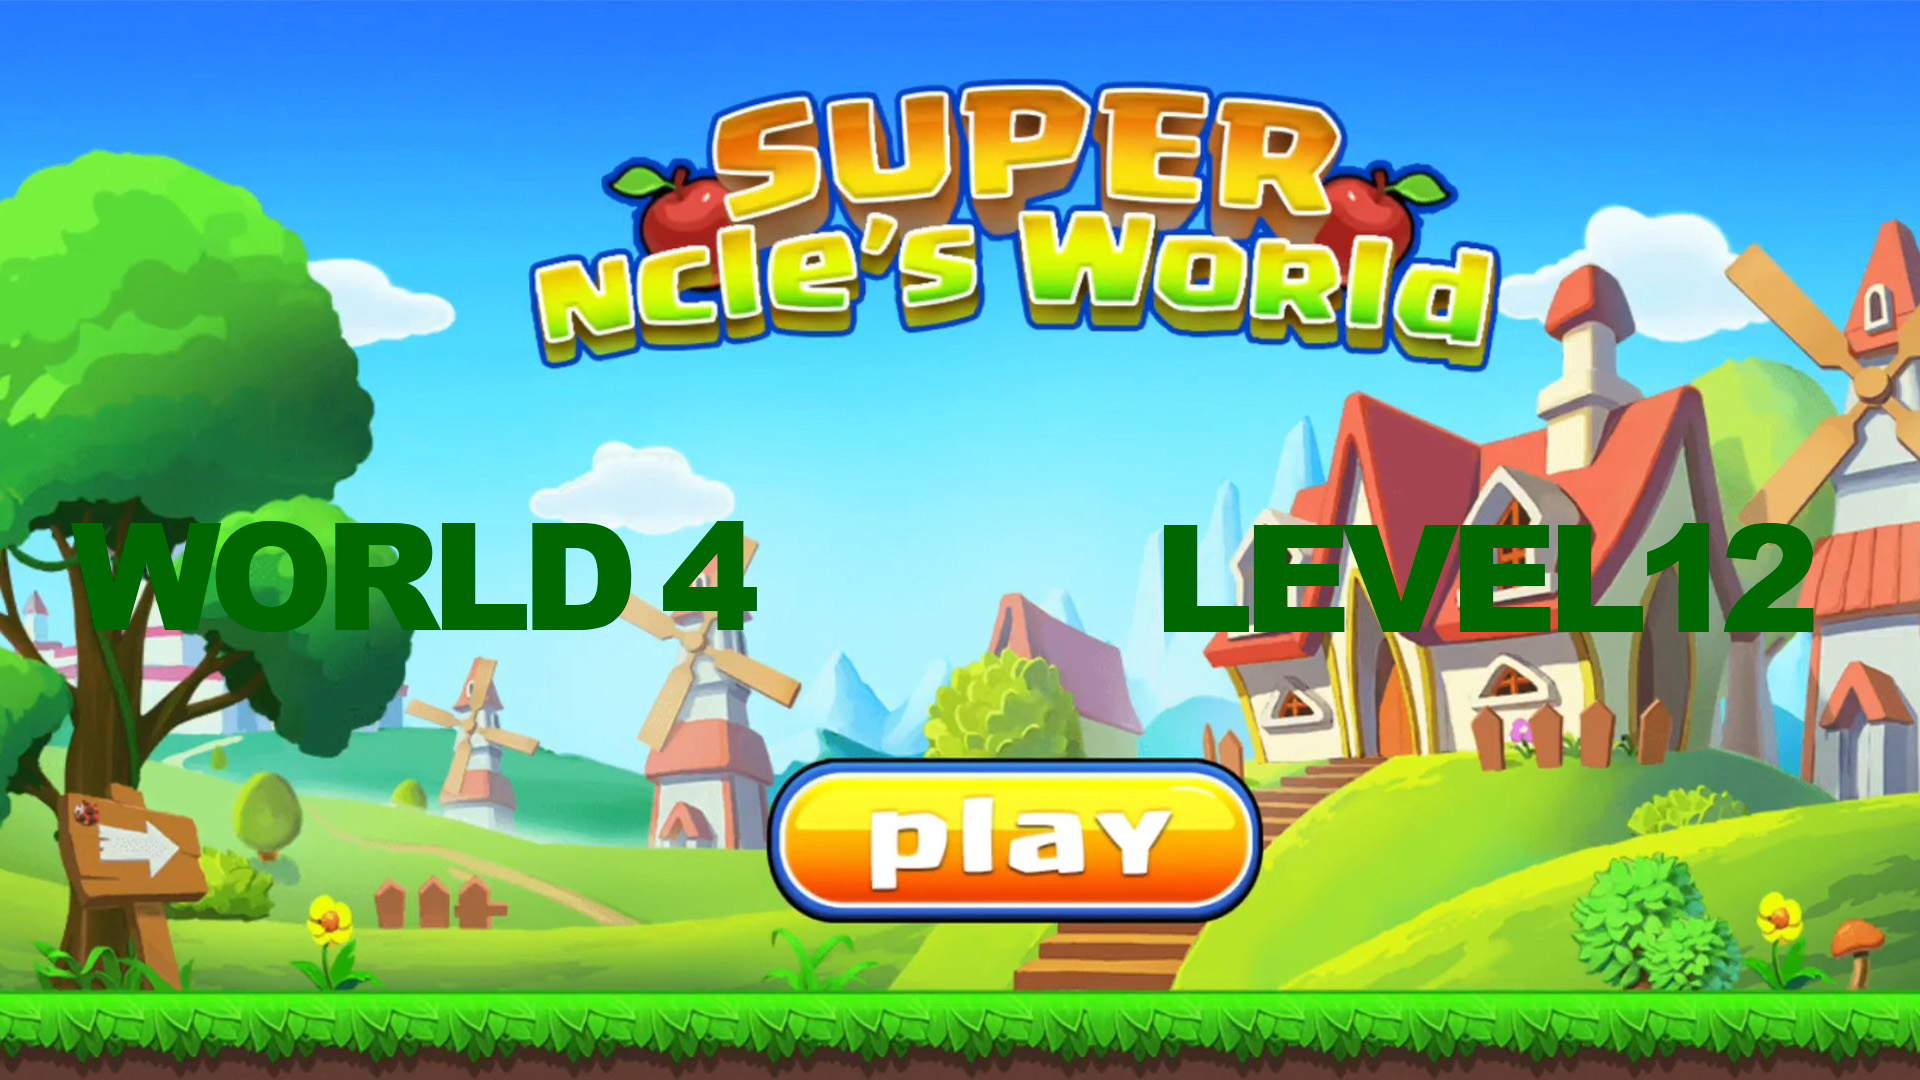 Super ncle's  World 4. Level 12.